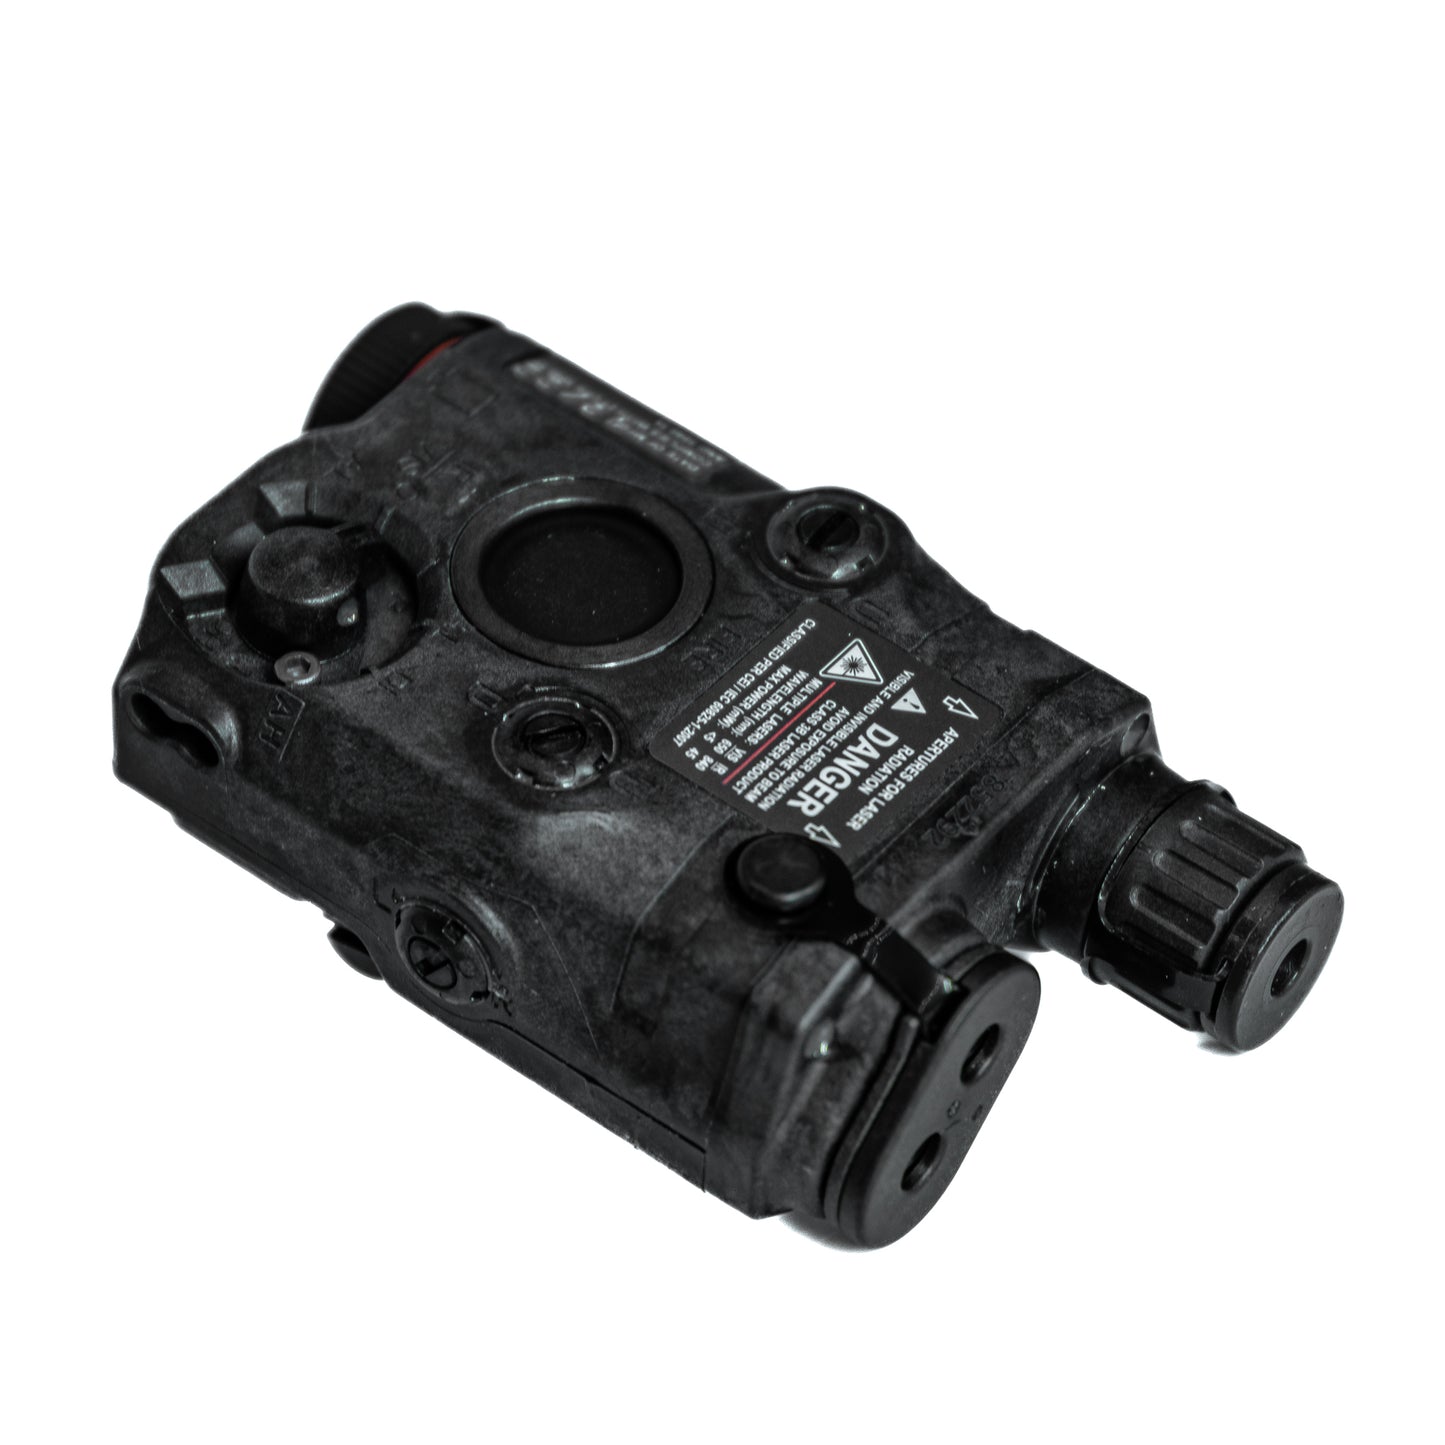 L3 Harris ATPIAL/PEQ15 Advanced Target Pointer Illuminator Aiming Laser